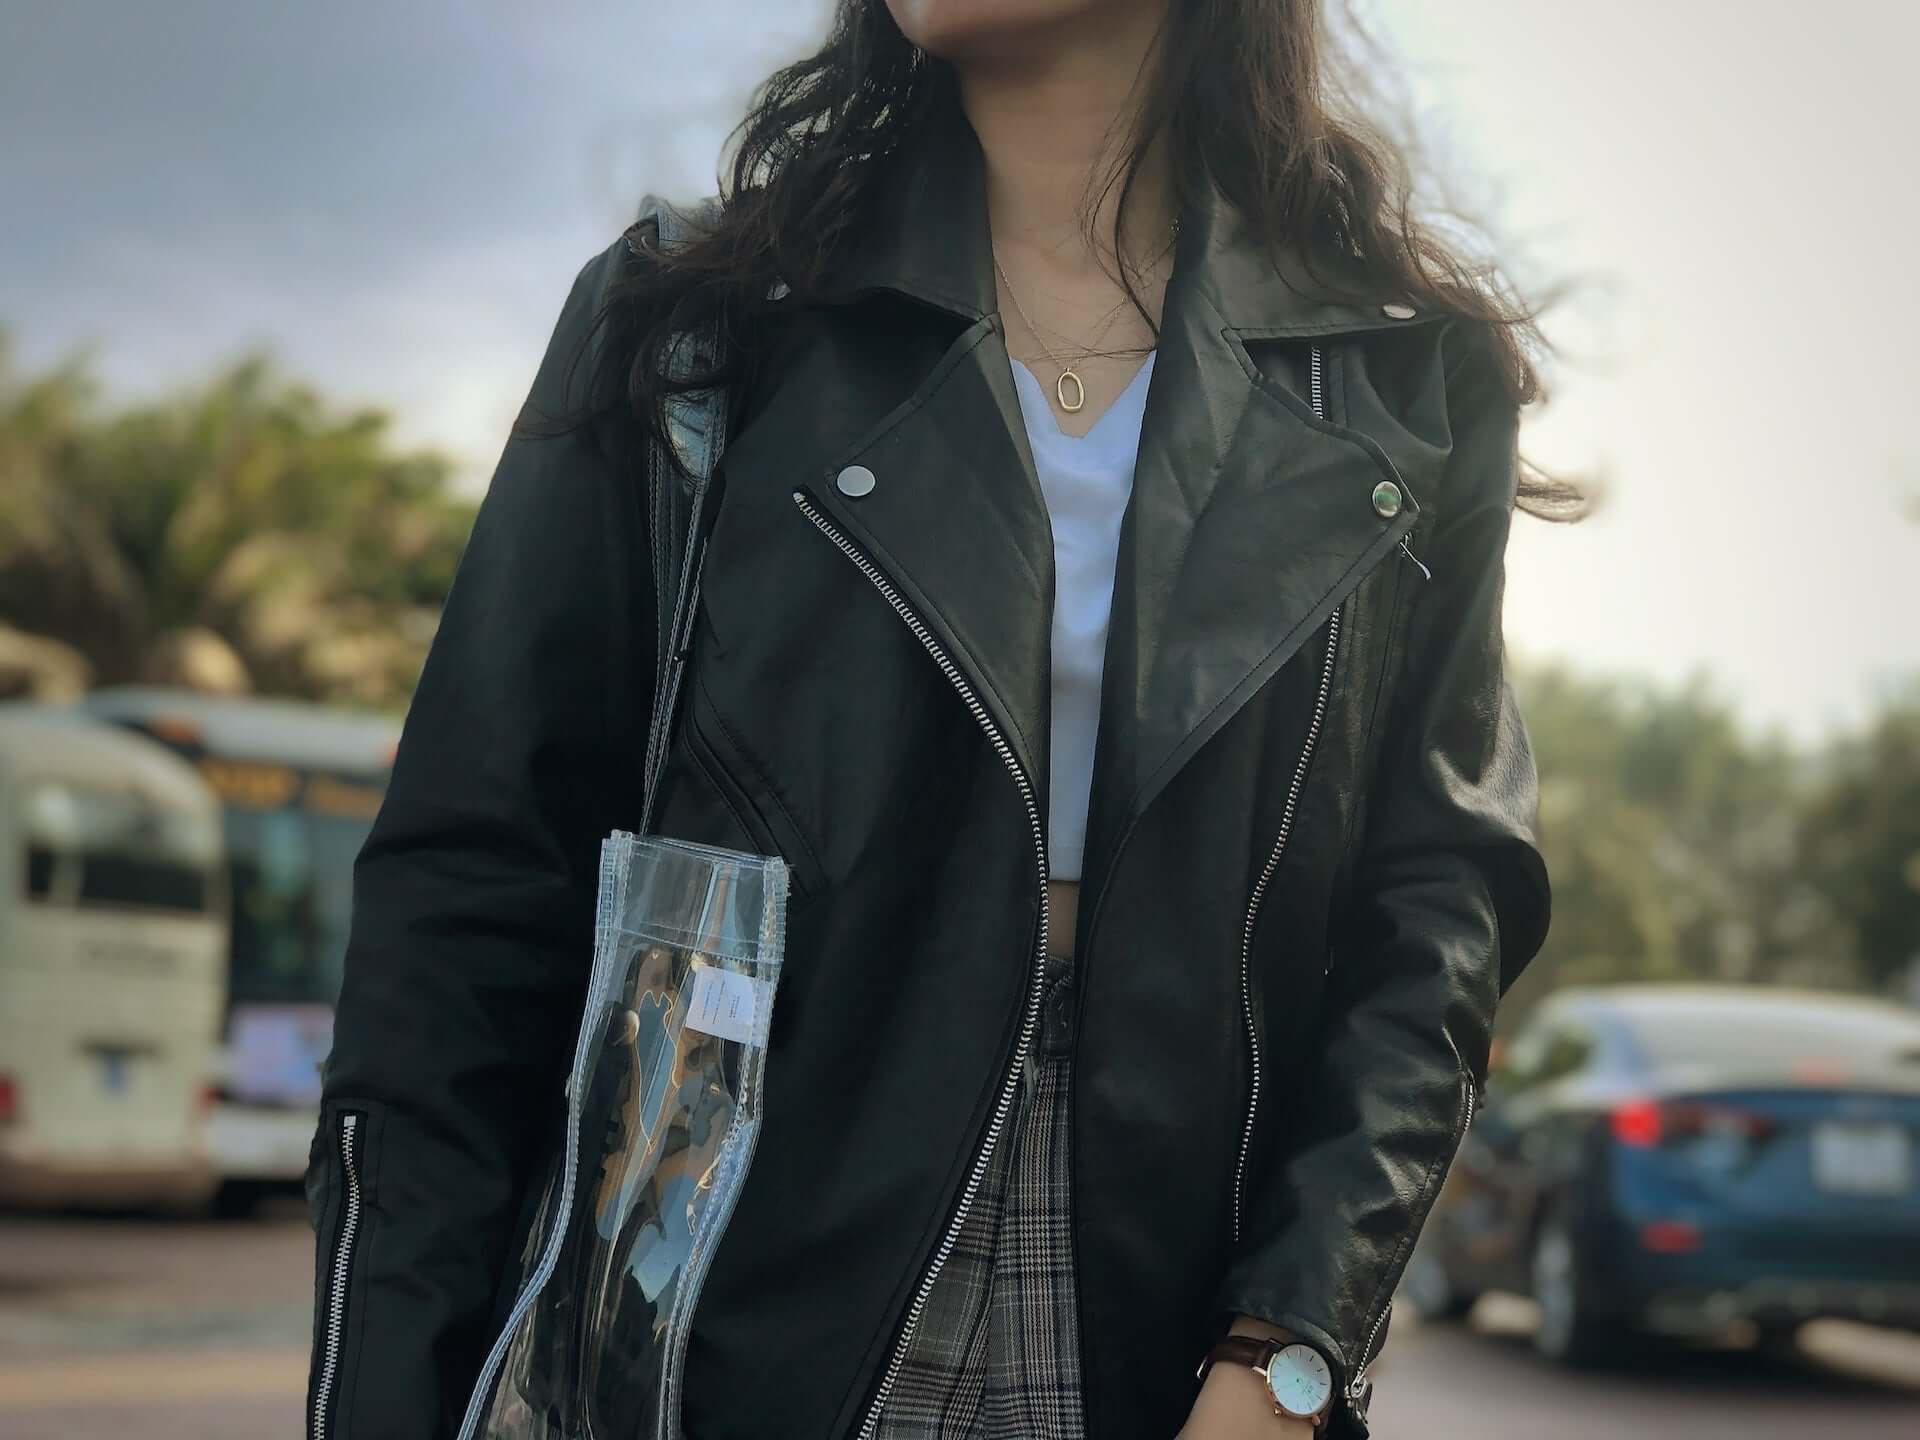 A woman wearing a black leather jacket.